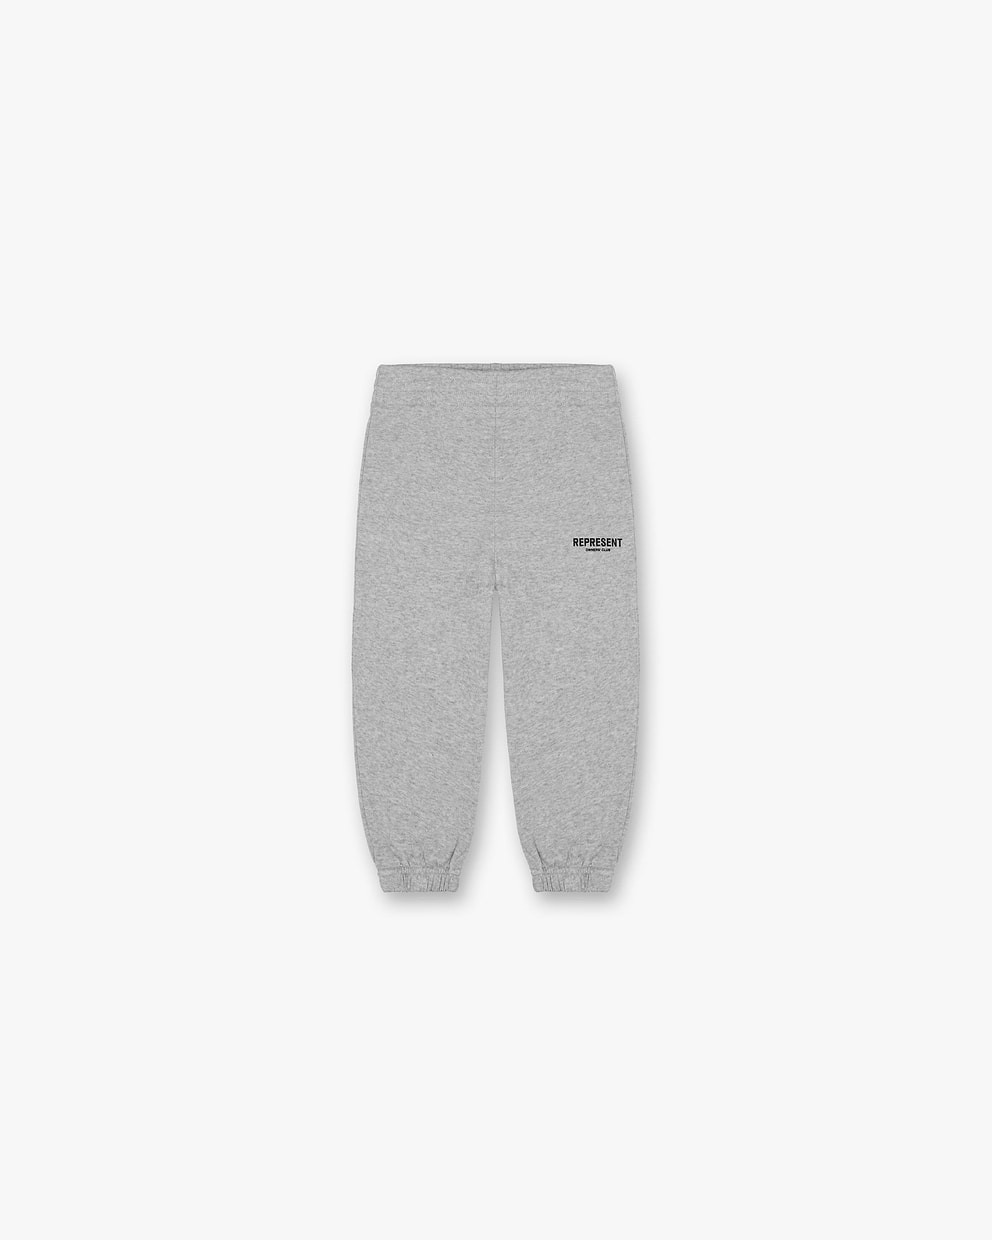 Represent Mini Owners Club Sweatpants - Ash Grey